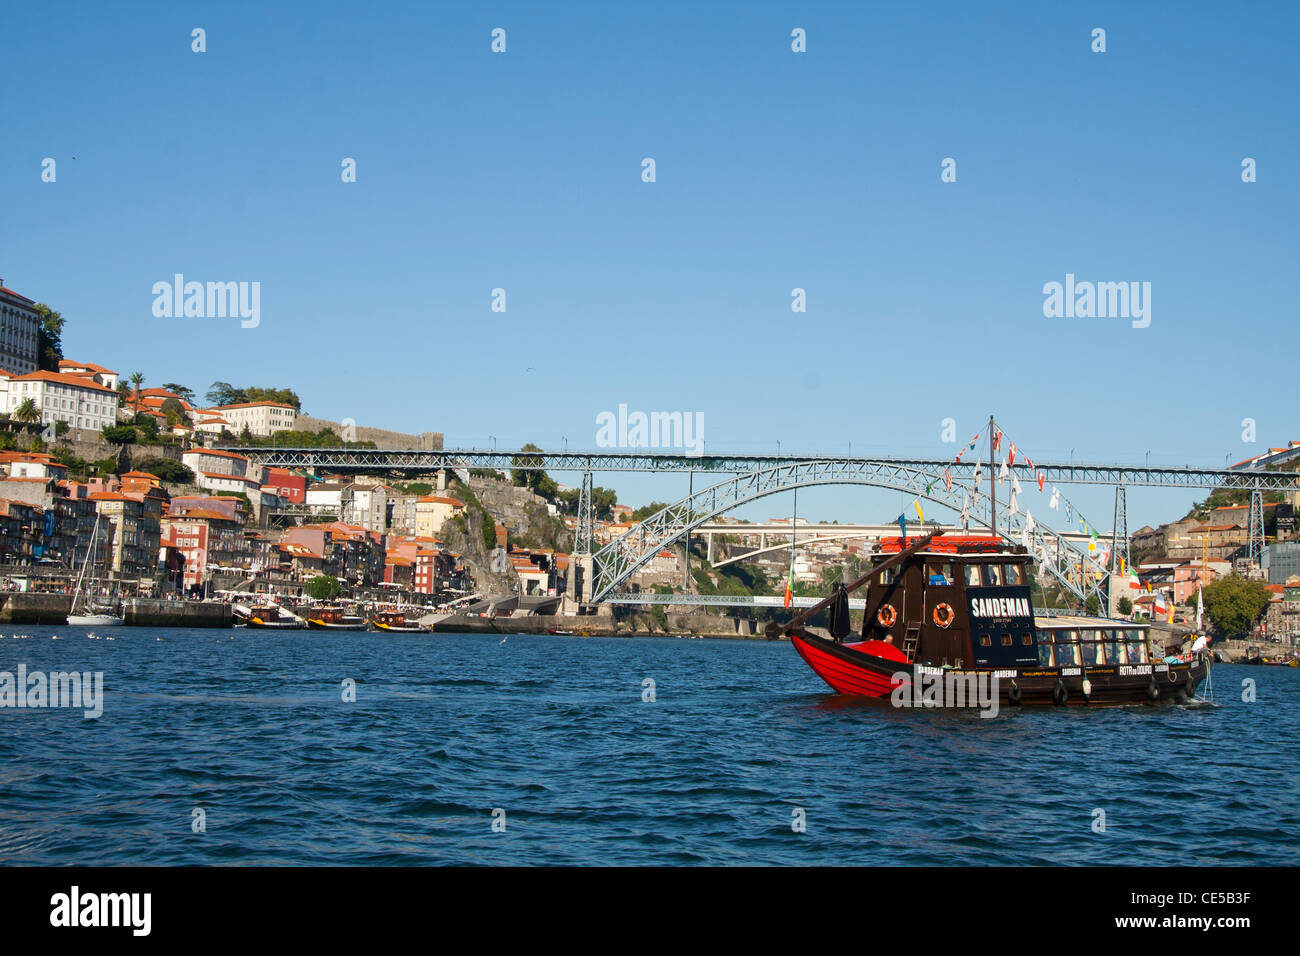 Sandeman Barco rabelo on the Douro river with D Luis Iron brigde, Porto and Vila Nova De Gaia on the background Stock Photo